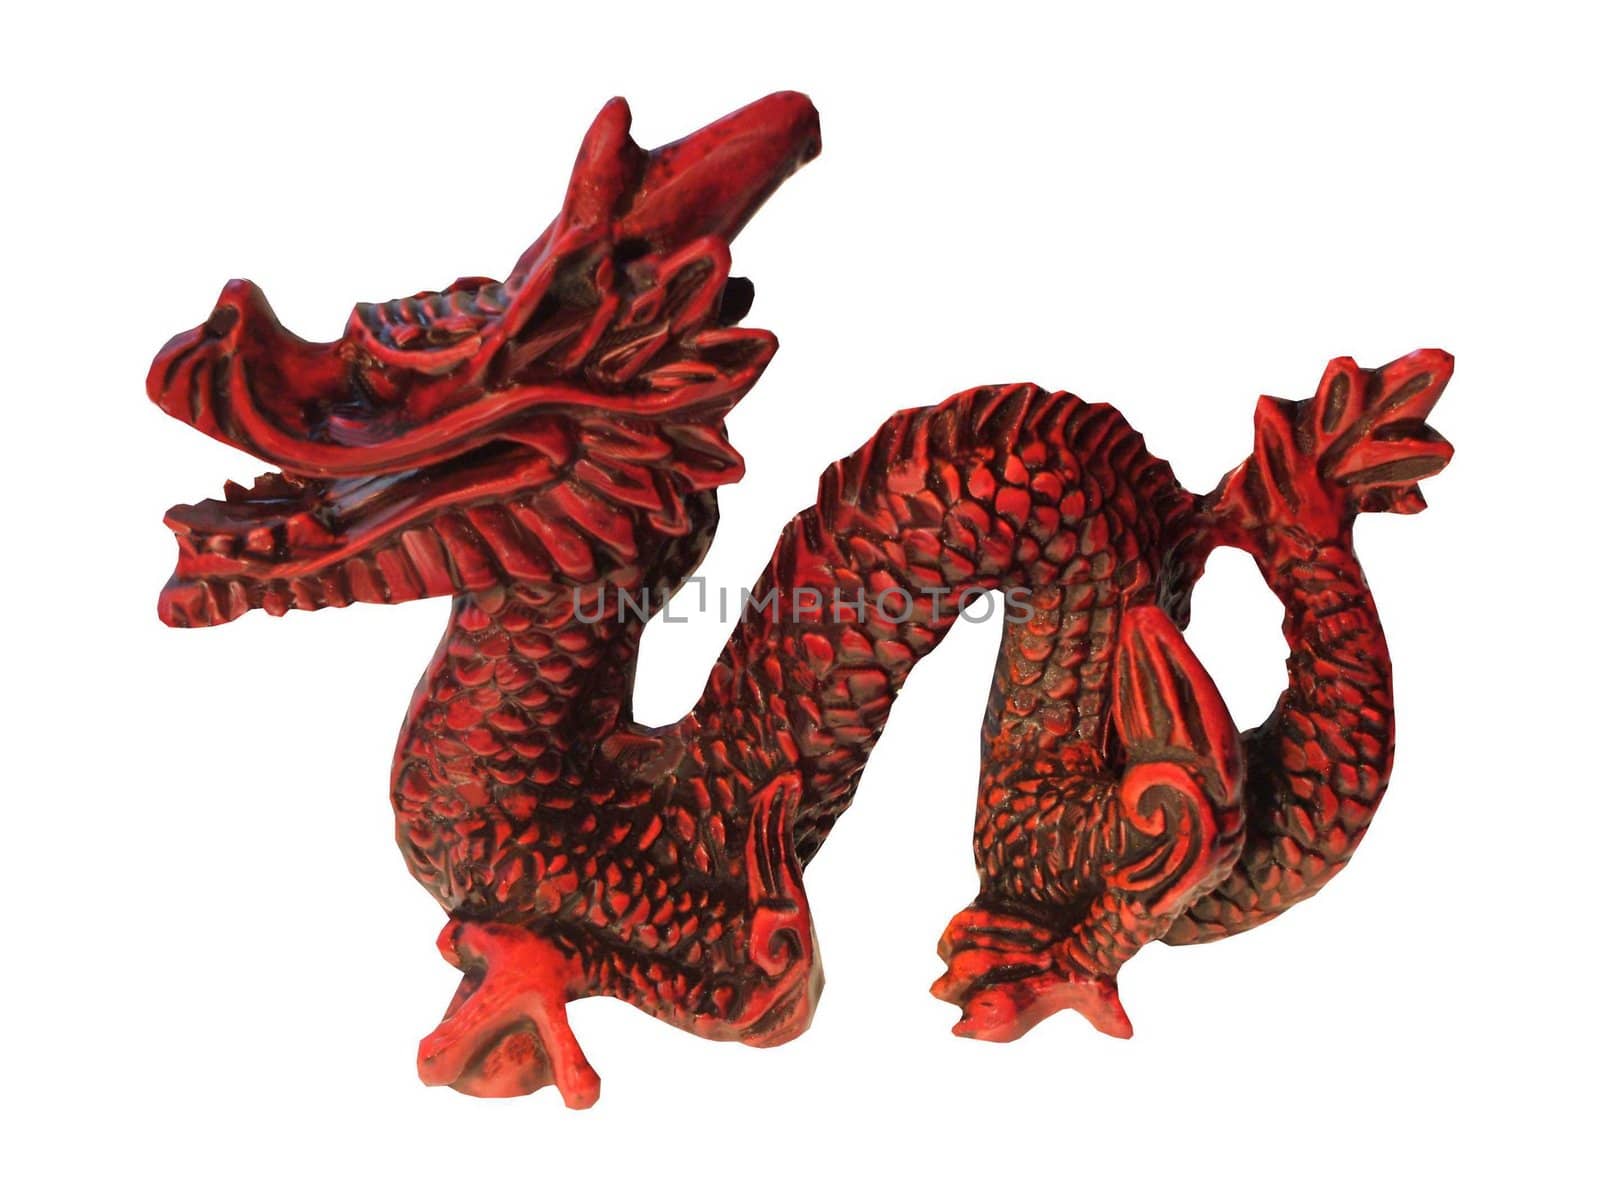 A Decorative Red Ornamental Oriental Display Dragon.